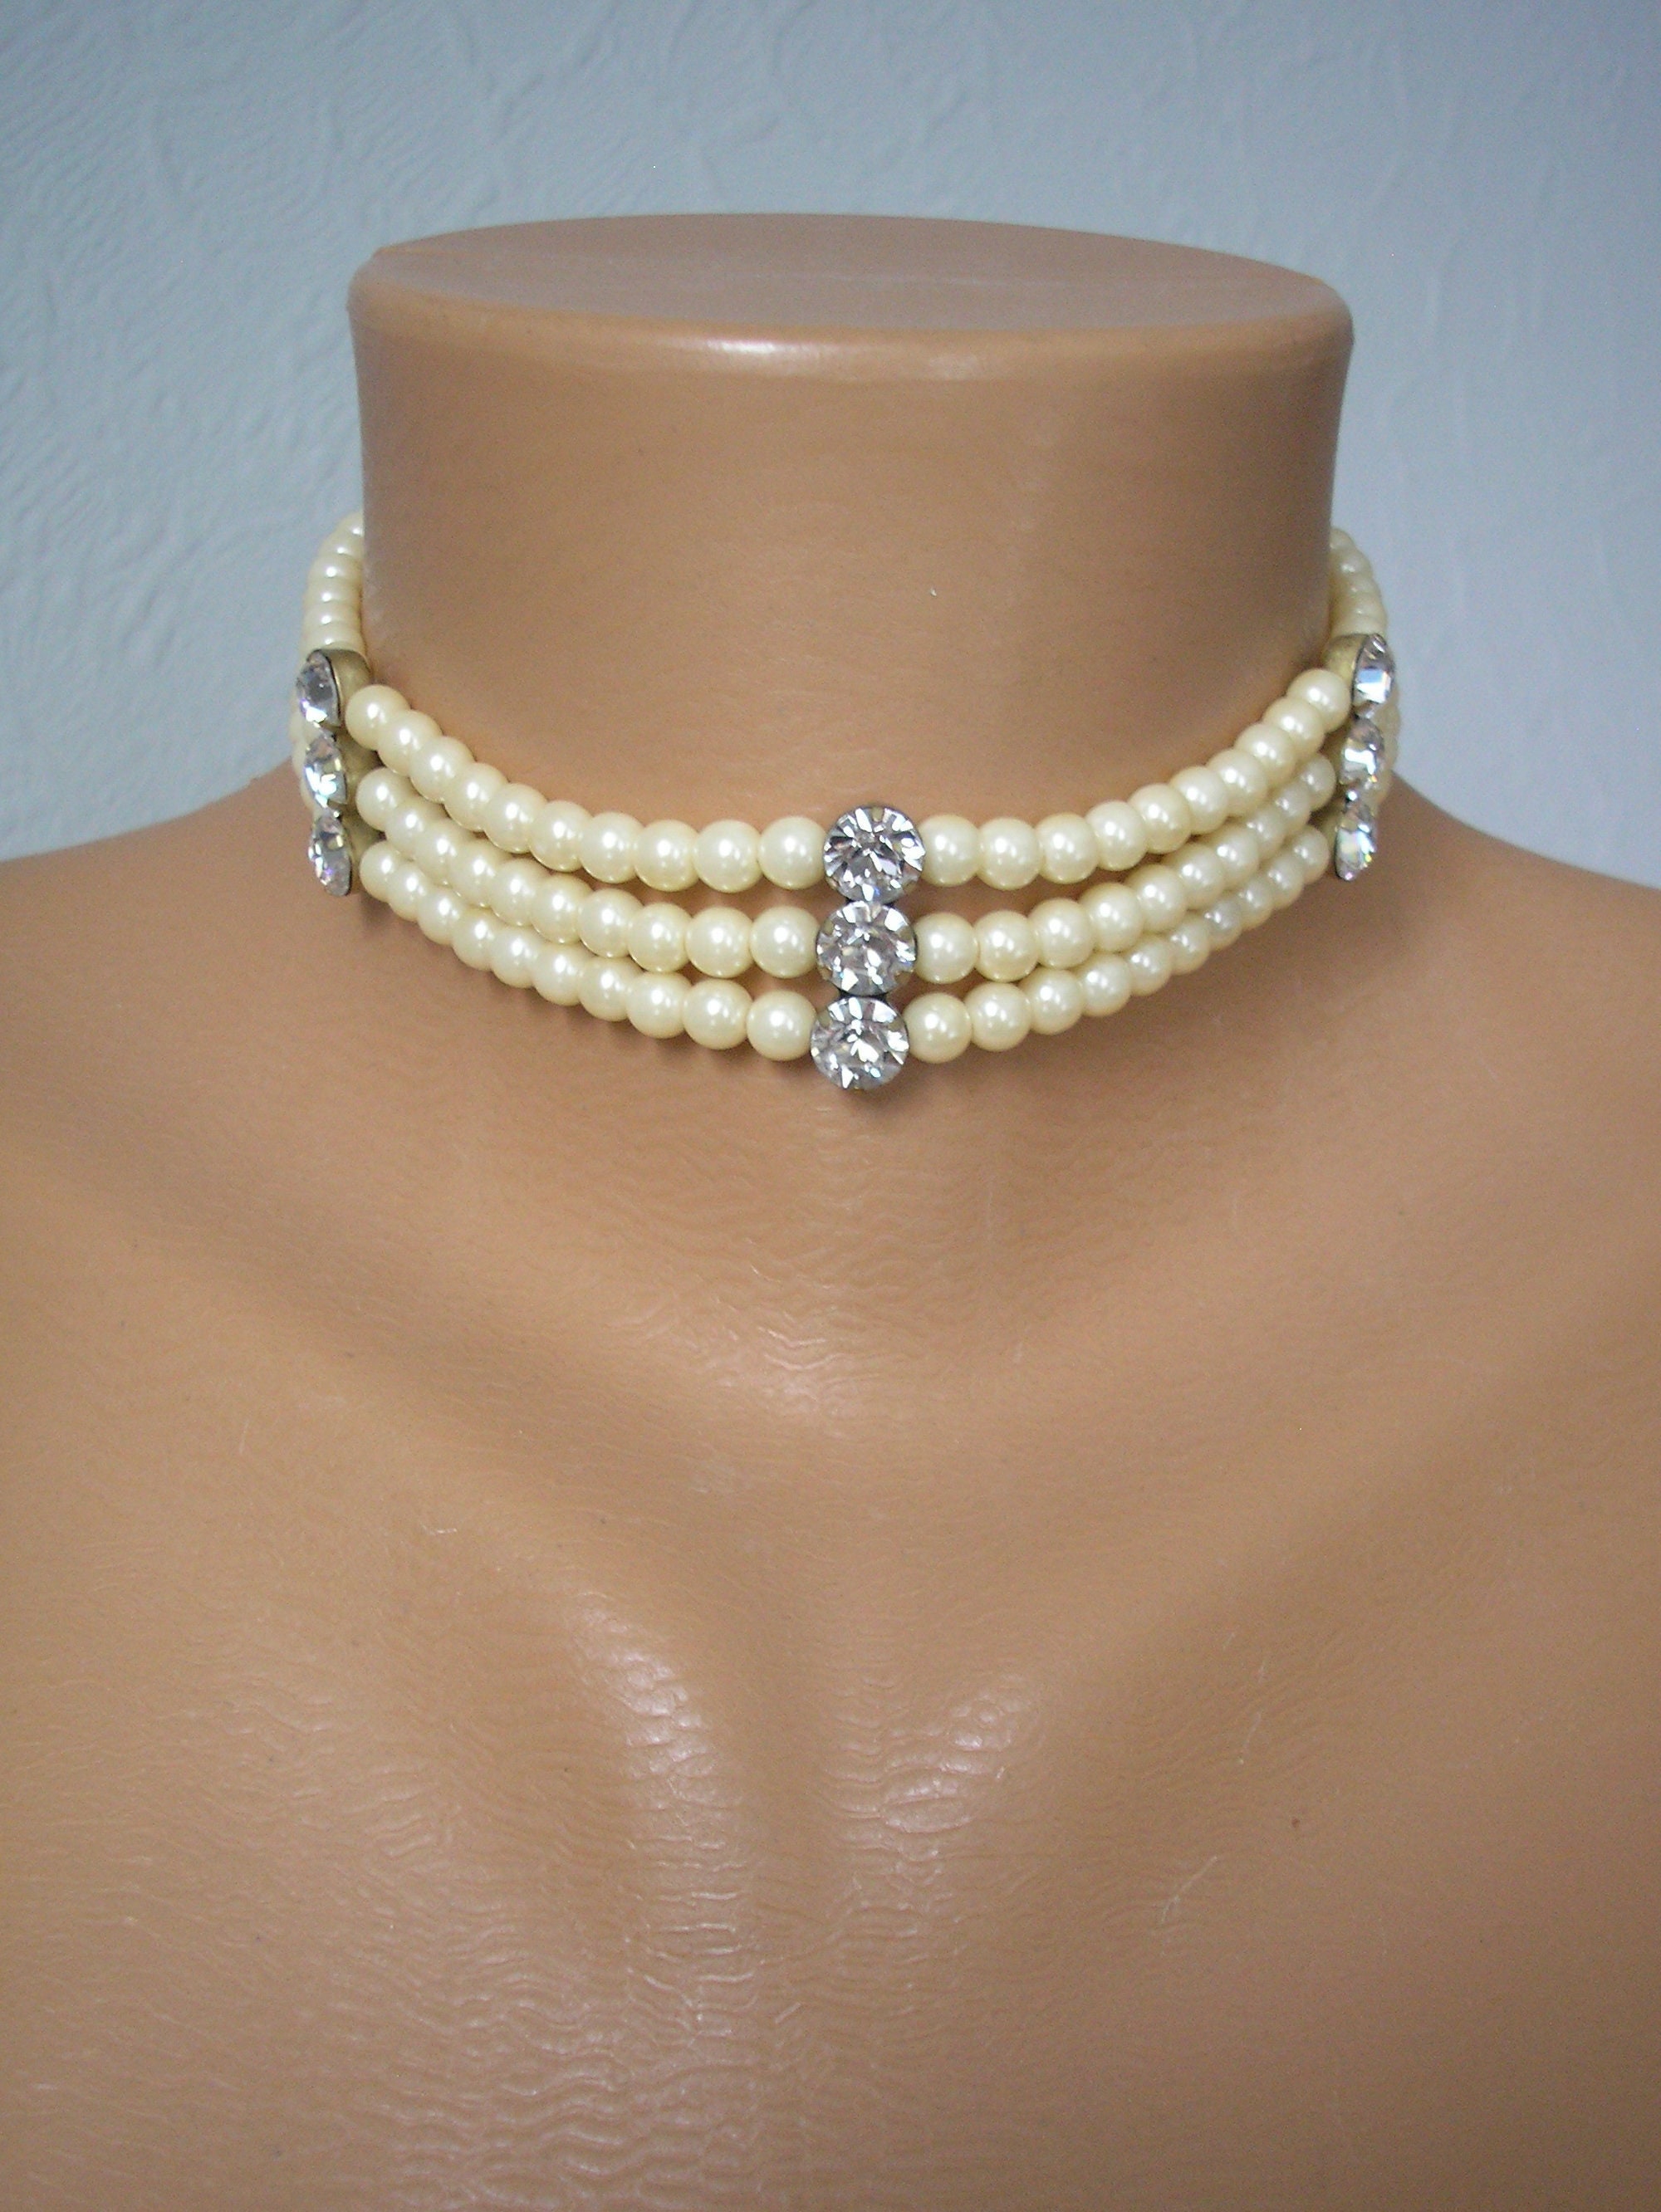 chanel authentic vintage choker necklace